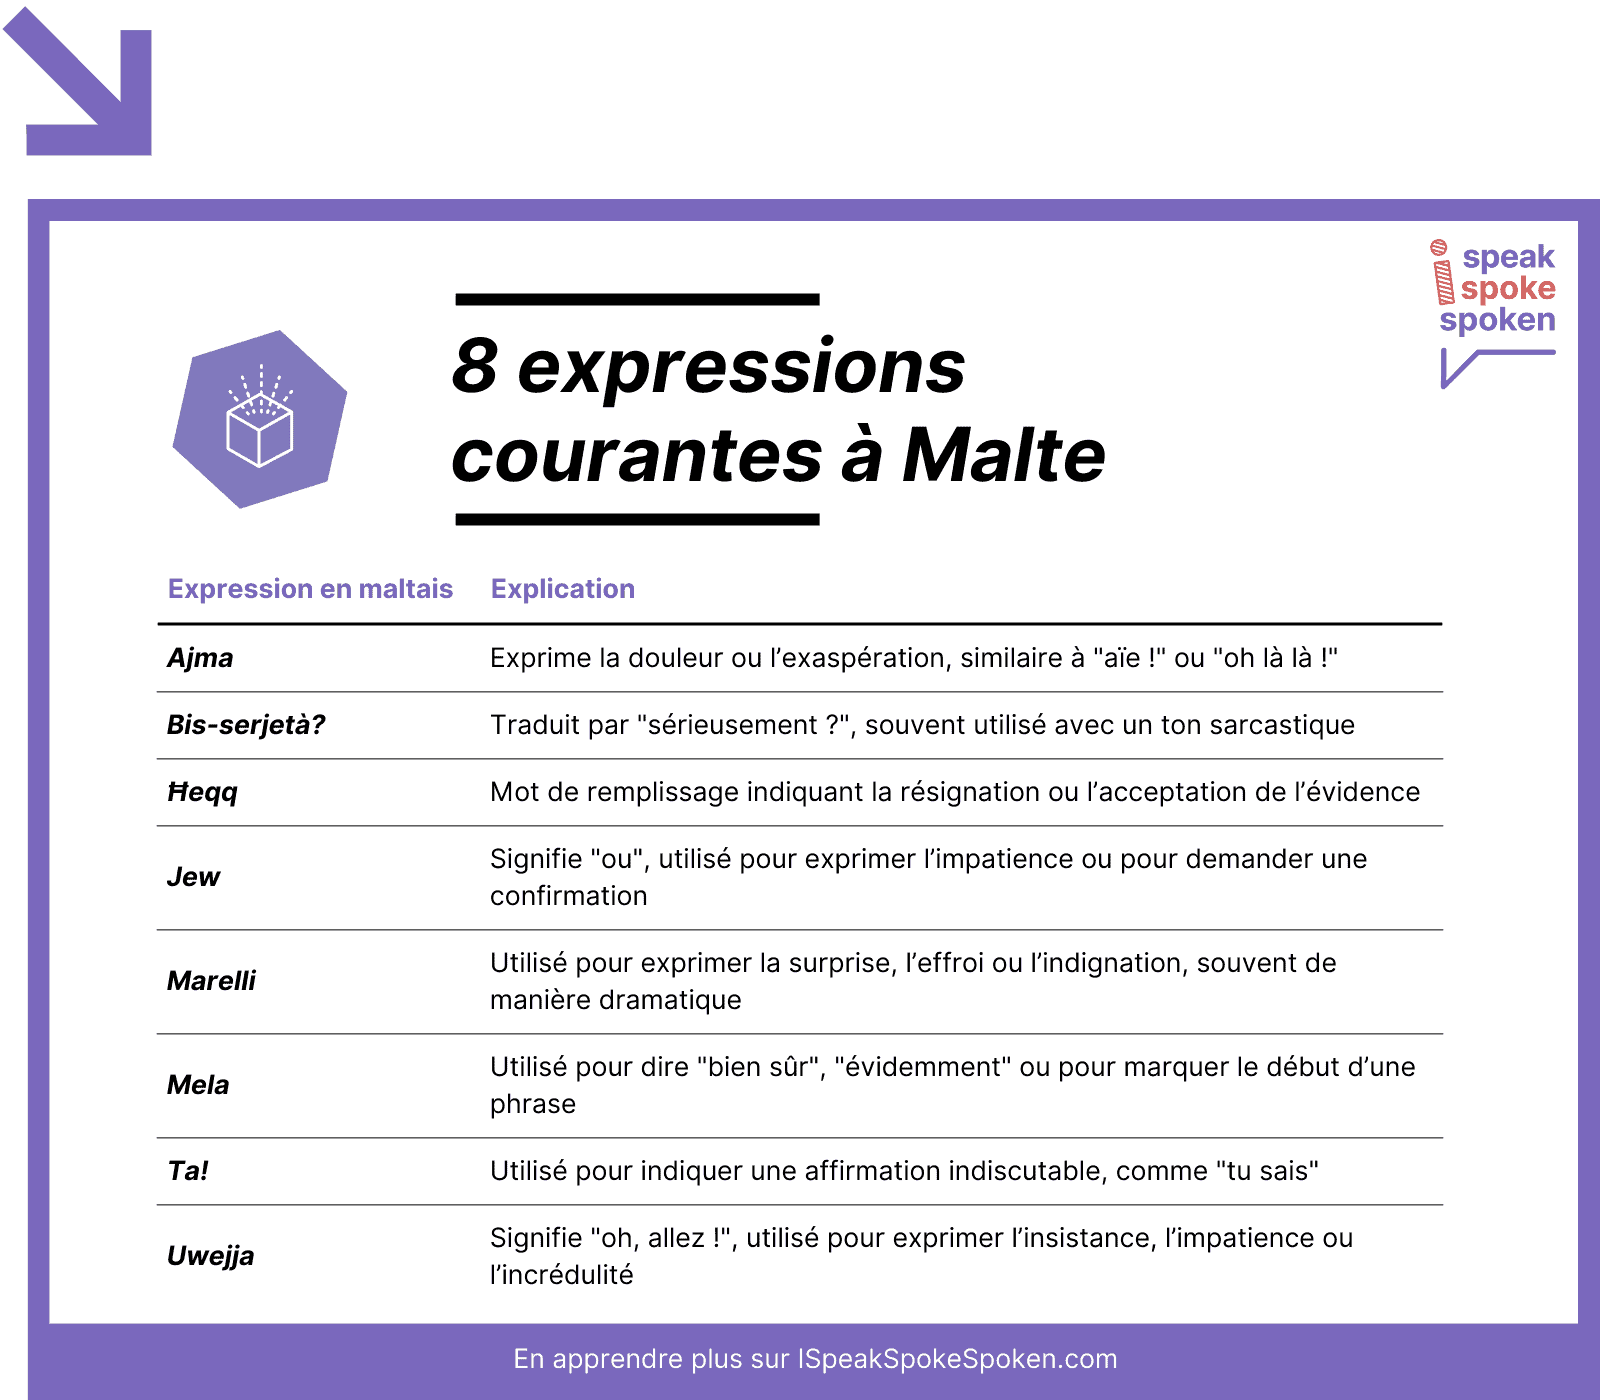 8 expressions courantes à Malte